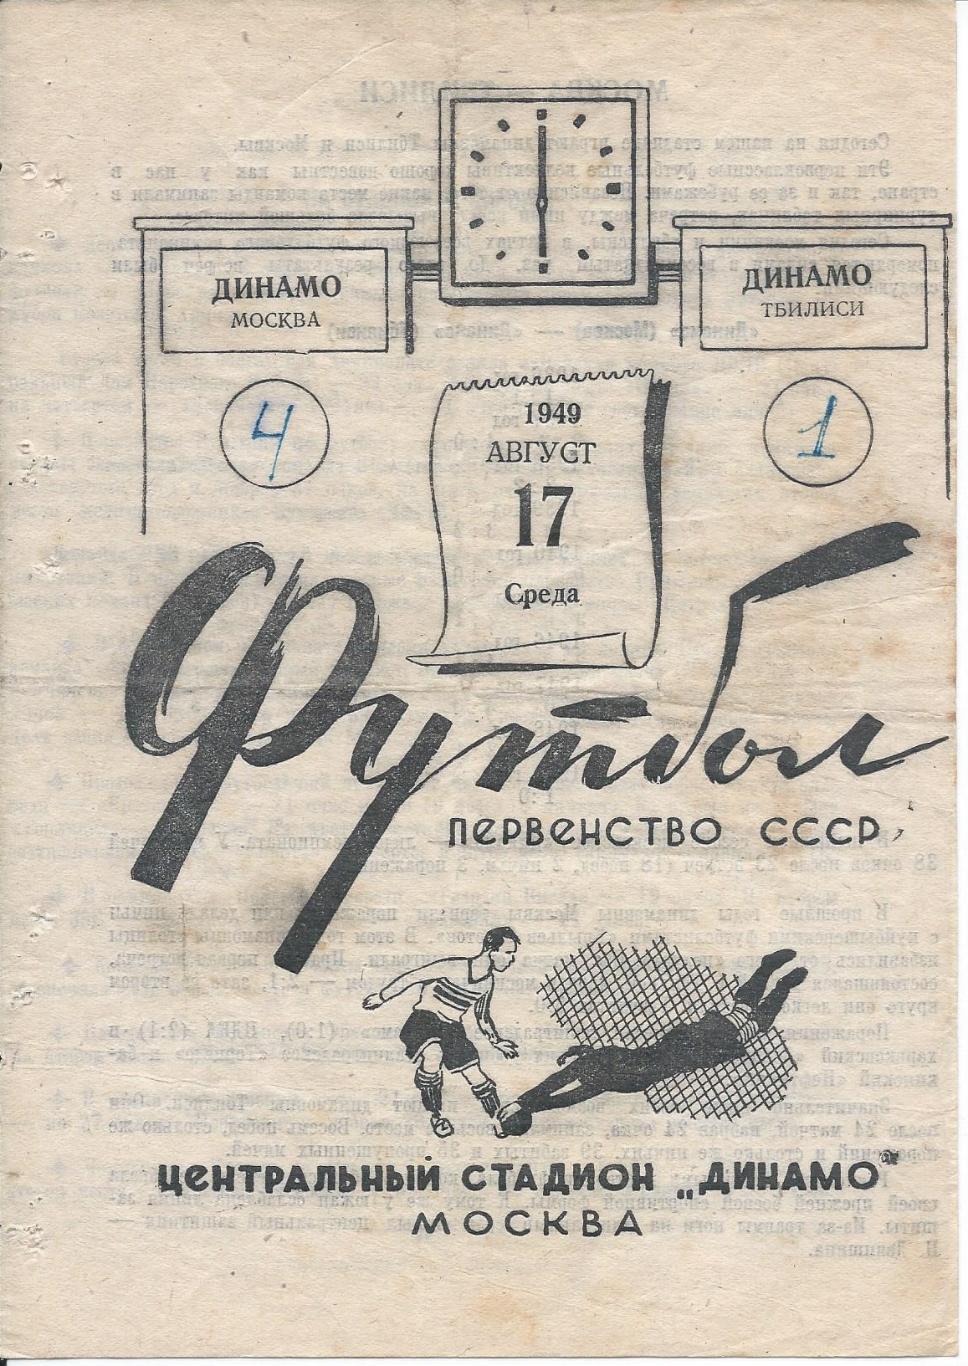 Динамо Москва - Динамо Тбилиси 17 августа 1949